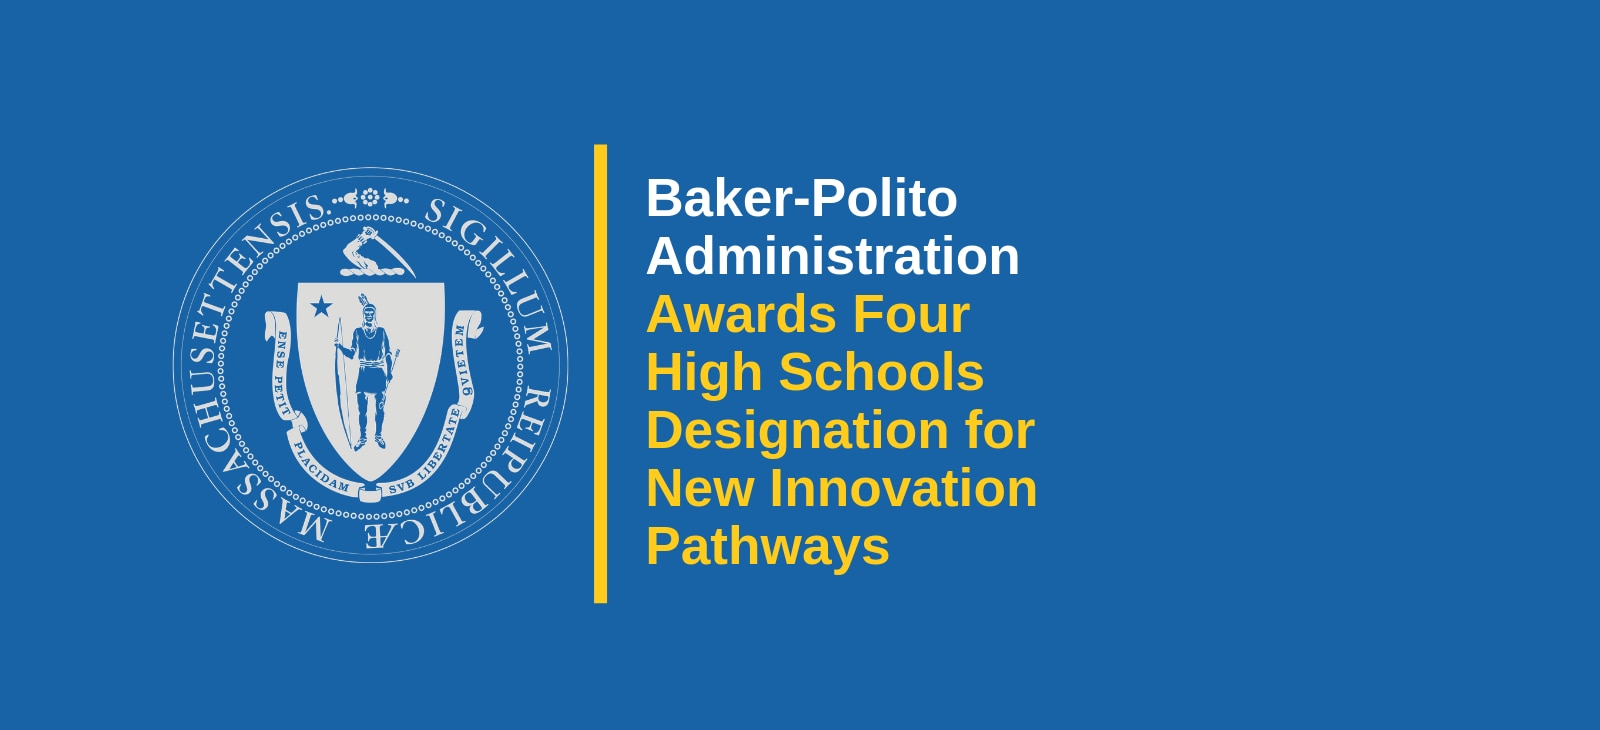 Baker-Polito Administration Awards Four High Schools Designation for New Innovation Pathways